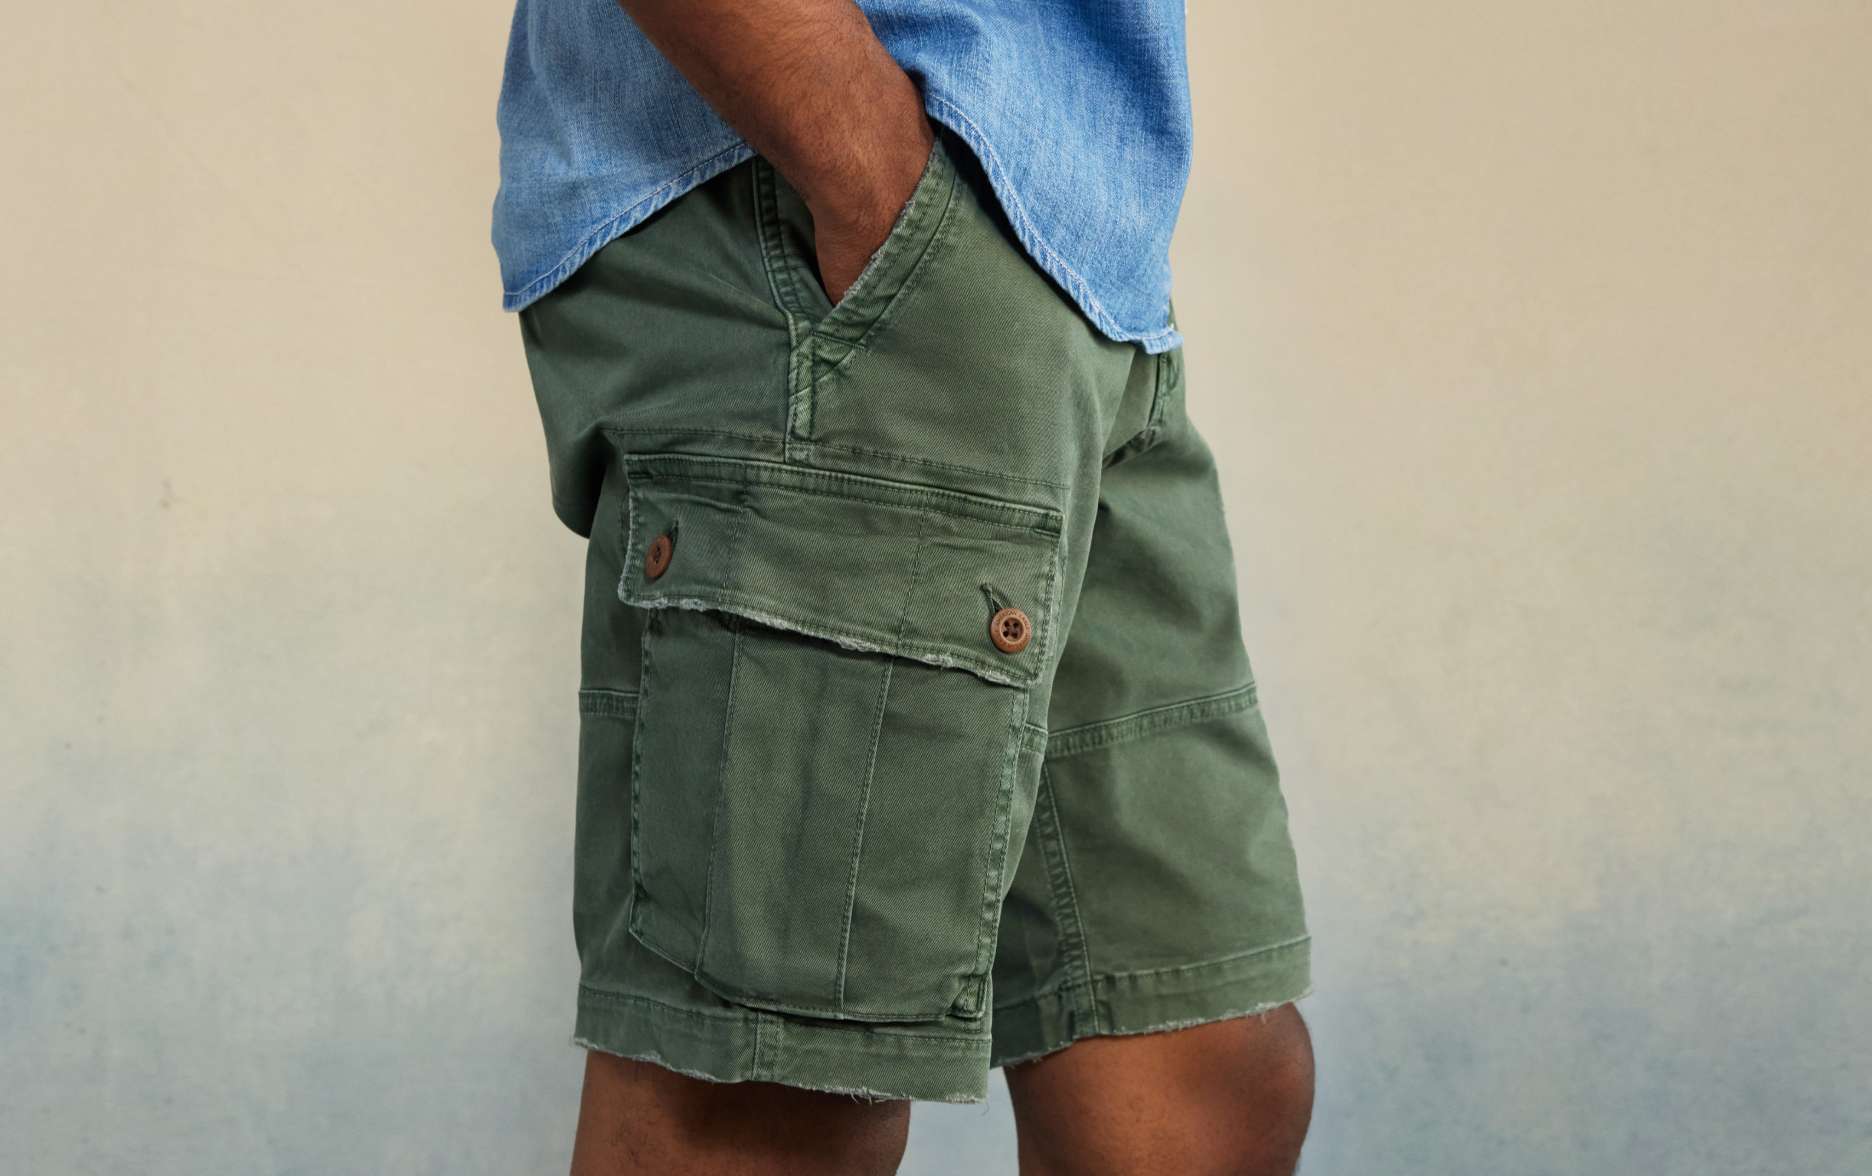 100% Cotton Men Cargo Short Pants Casual Shorts Cargo Pants Khaki Pants  Cotton Cropped Shorts Drawstring Shorts